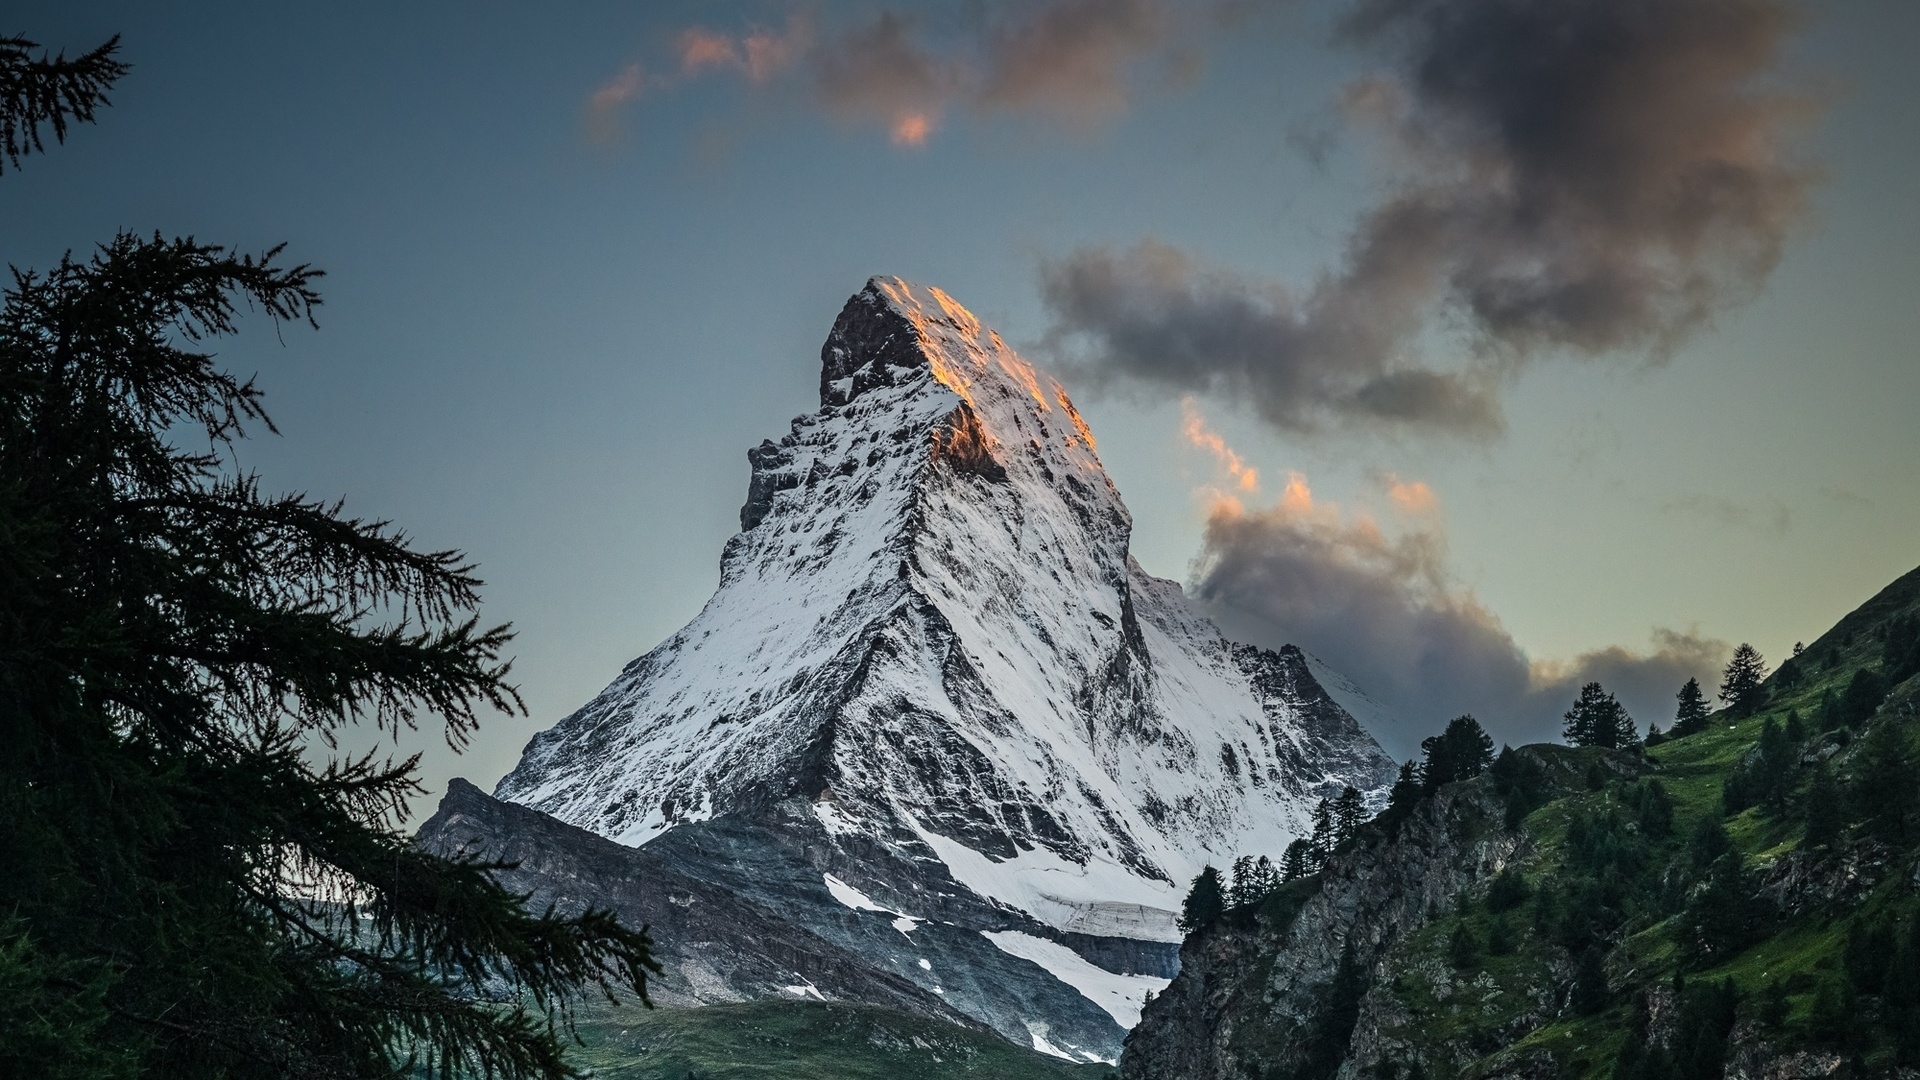 Amazing Mountain Peak for 1920 x 1080 HDTV 1080p resolution